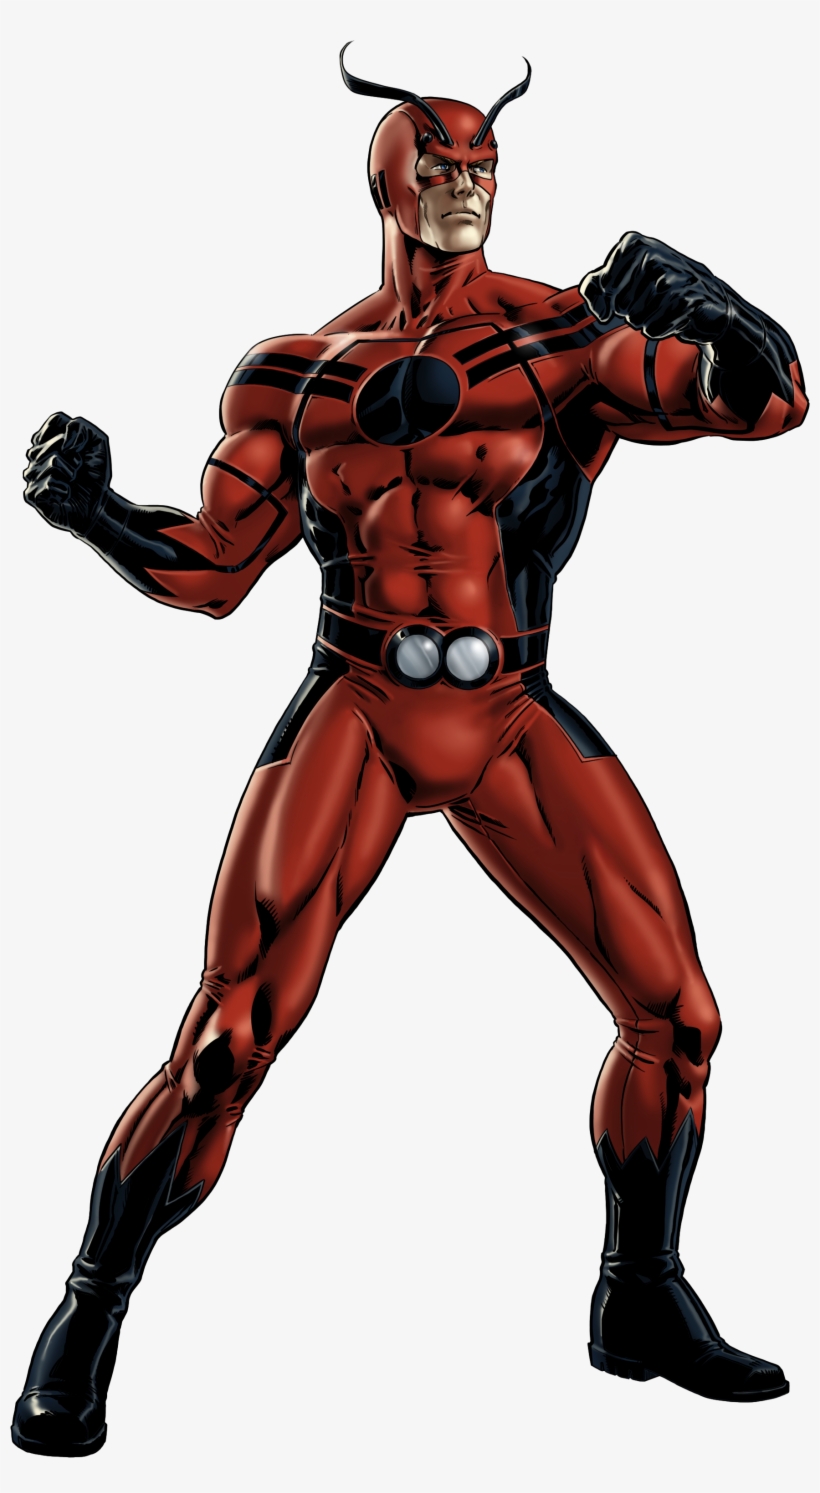 Hank Pym Portrait Art Hank Pym, Marvel Comic Character, - Ant Man Marvel, transparent png #79075